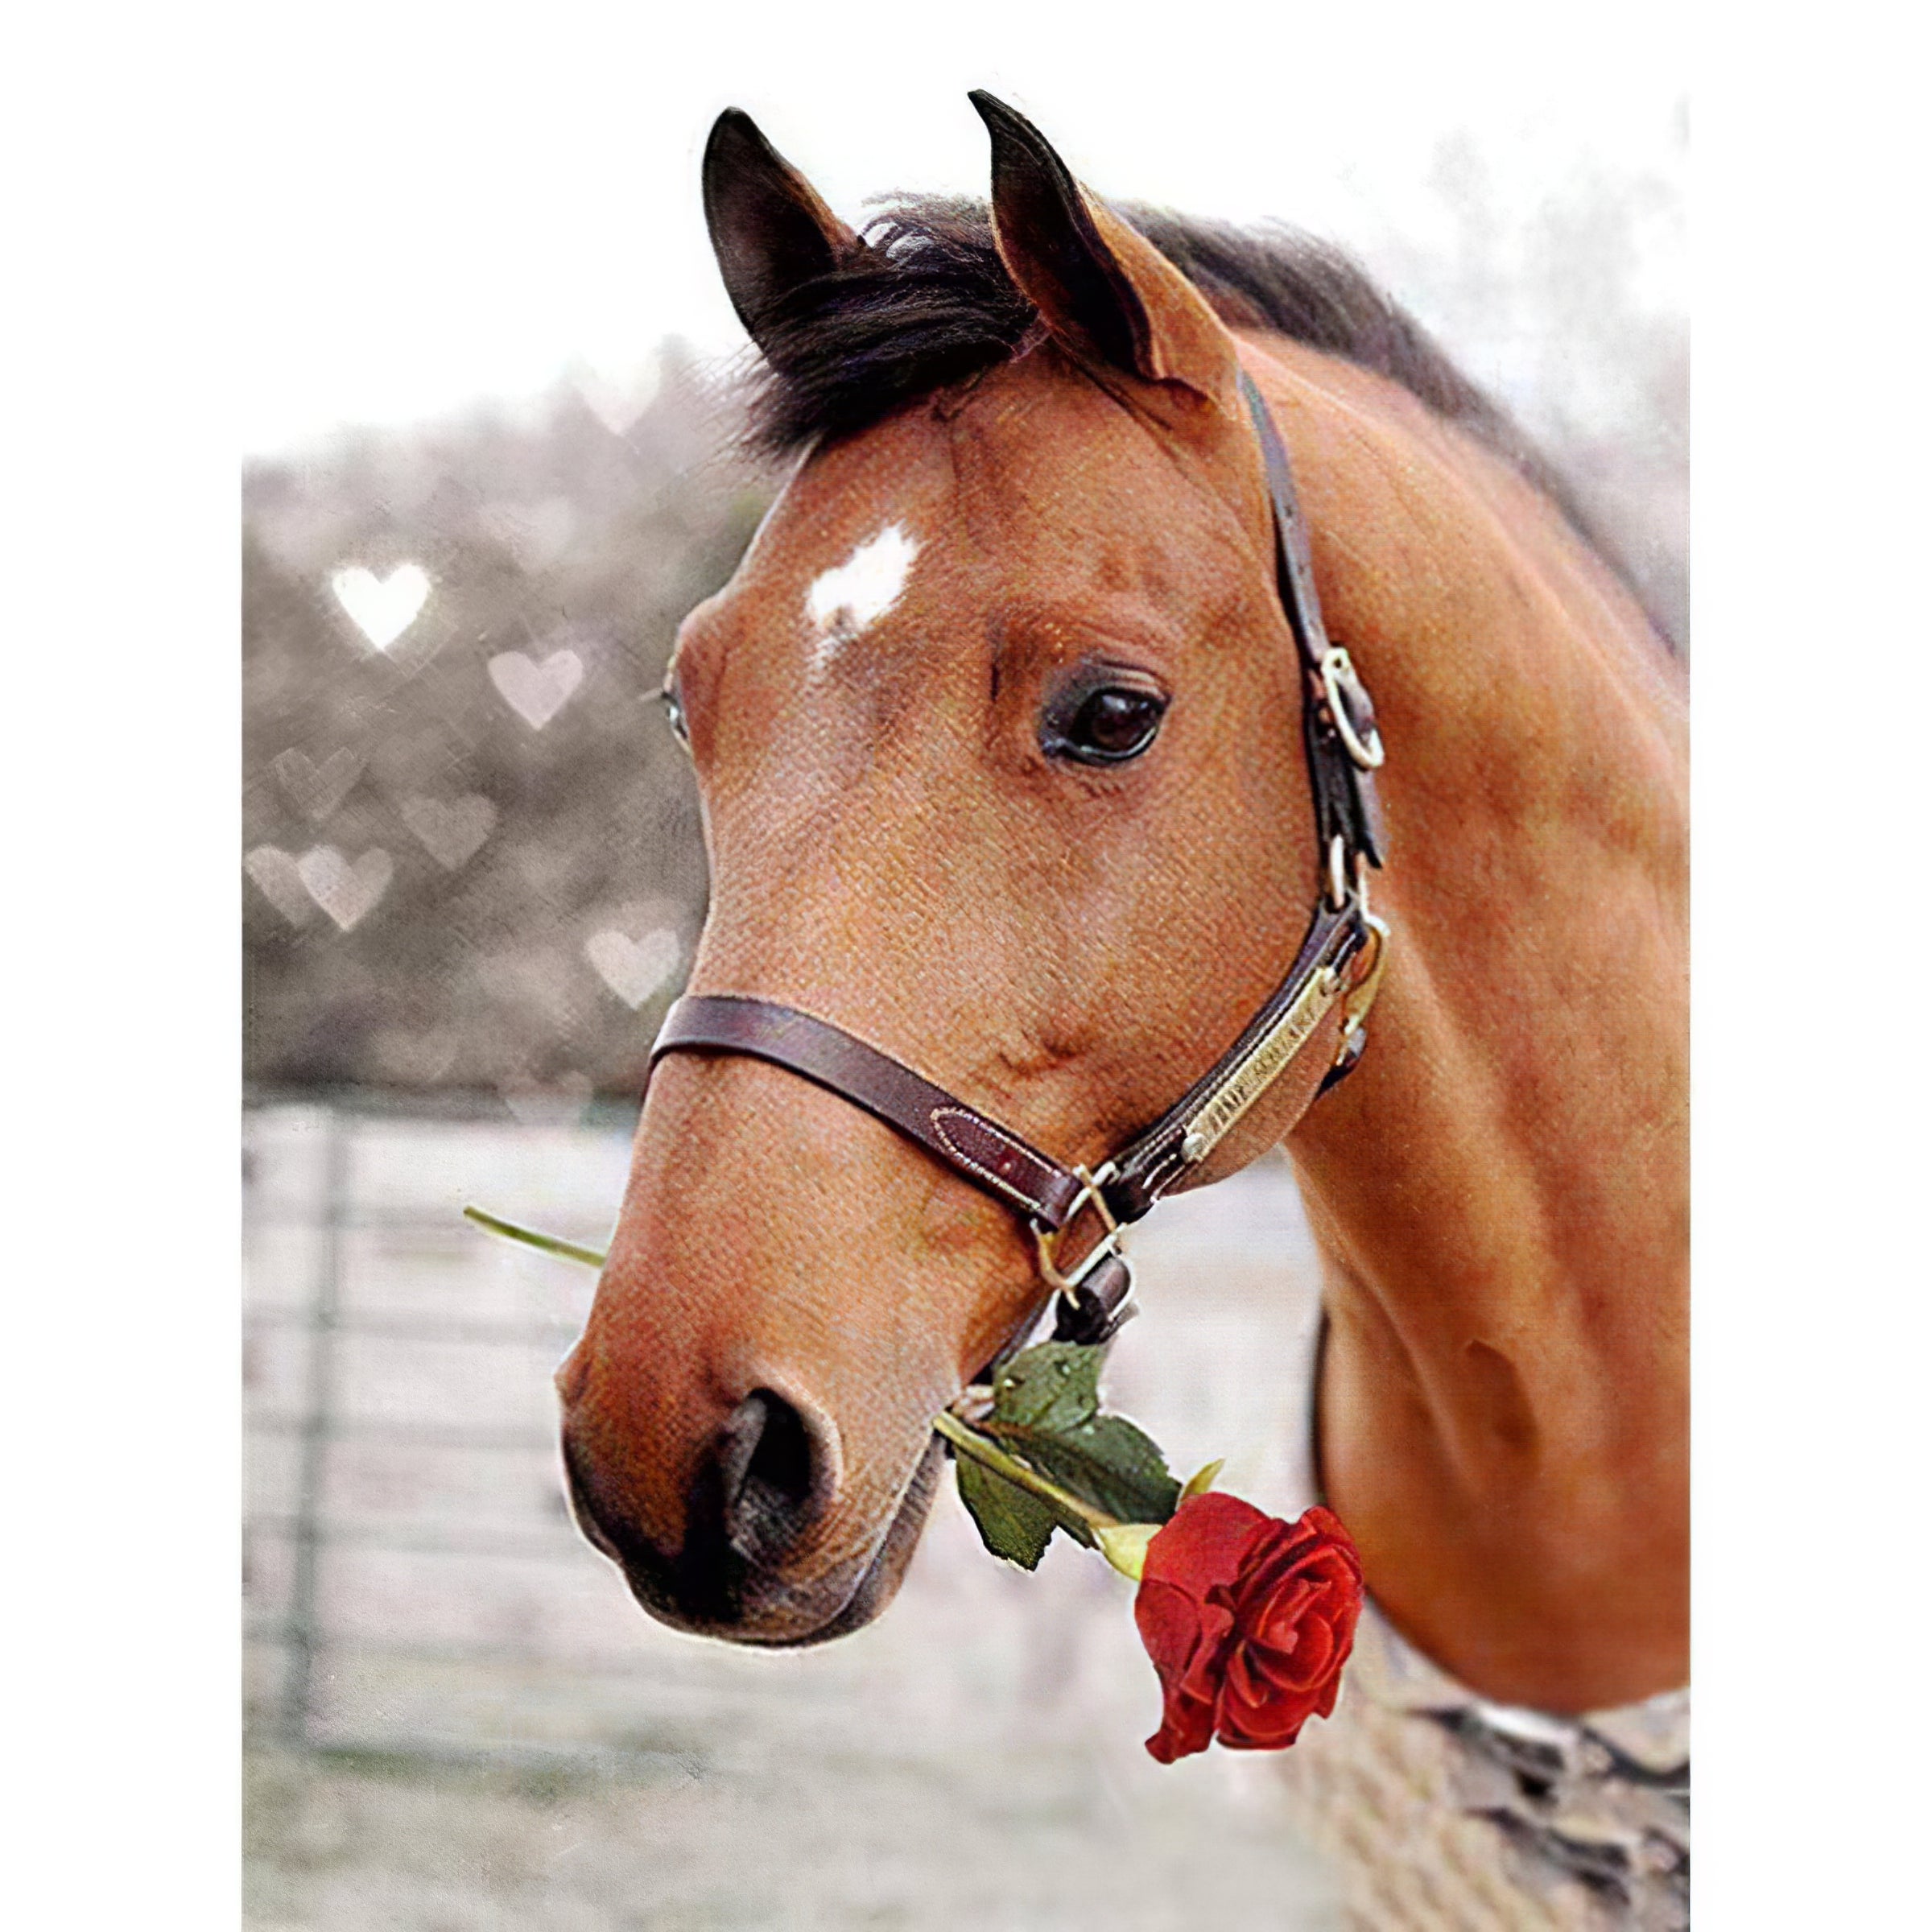 Le cheval ramasse la rose avec sa bouche